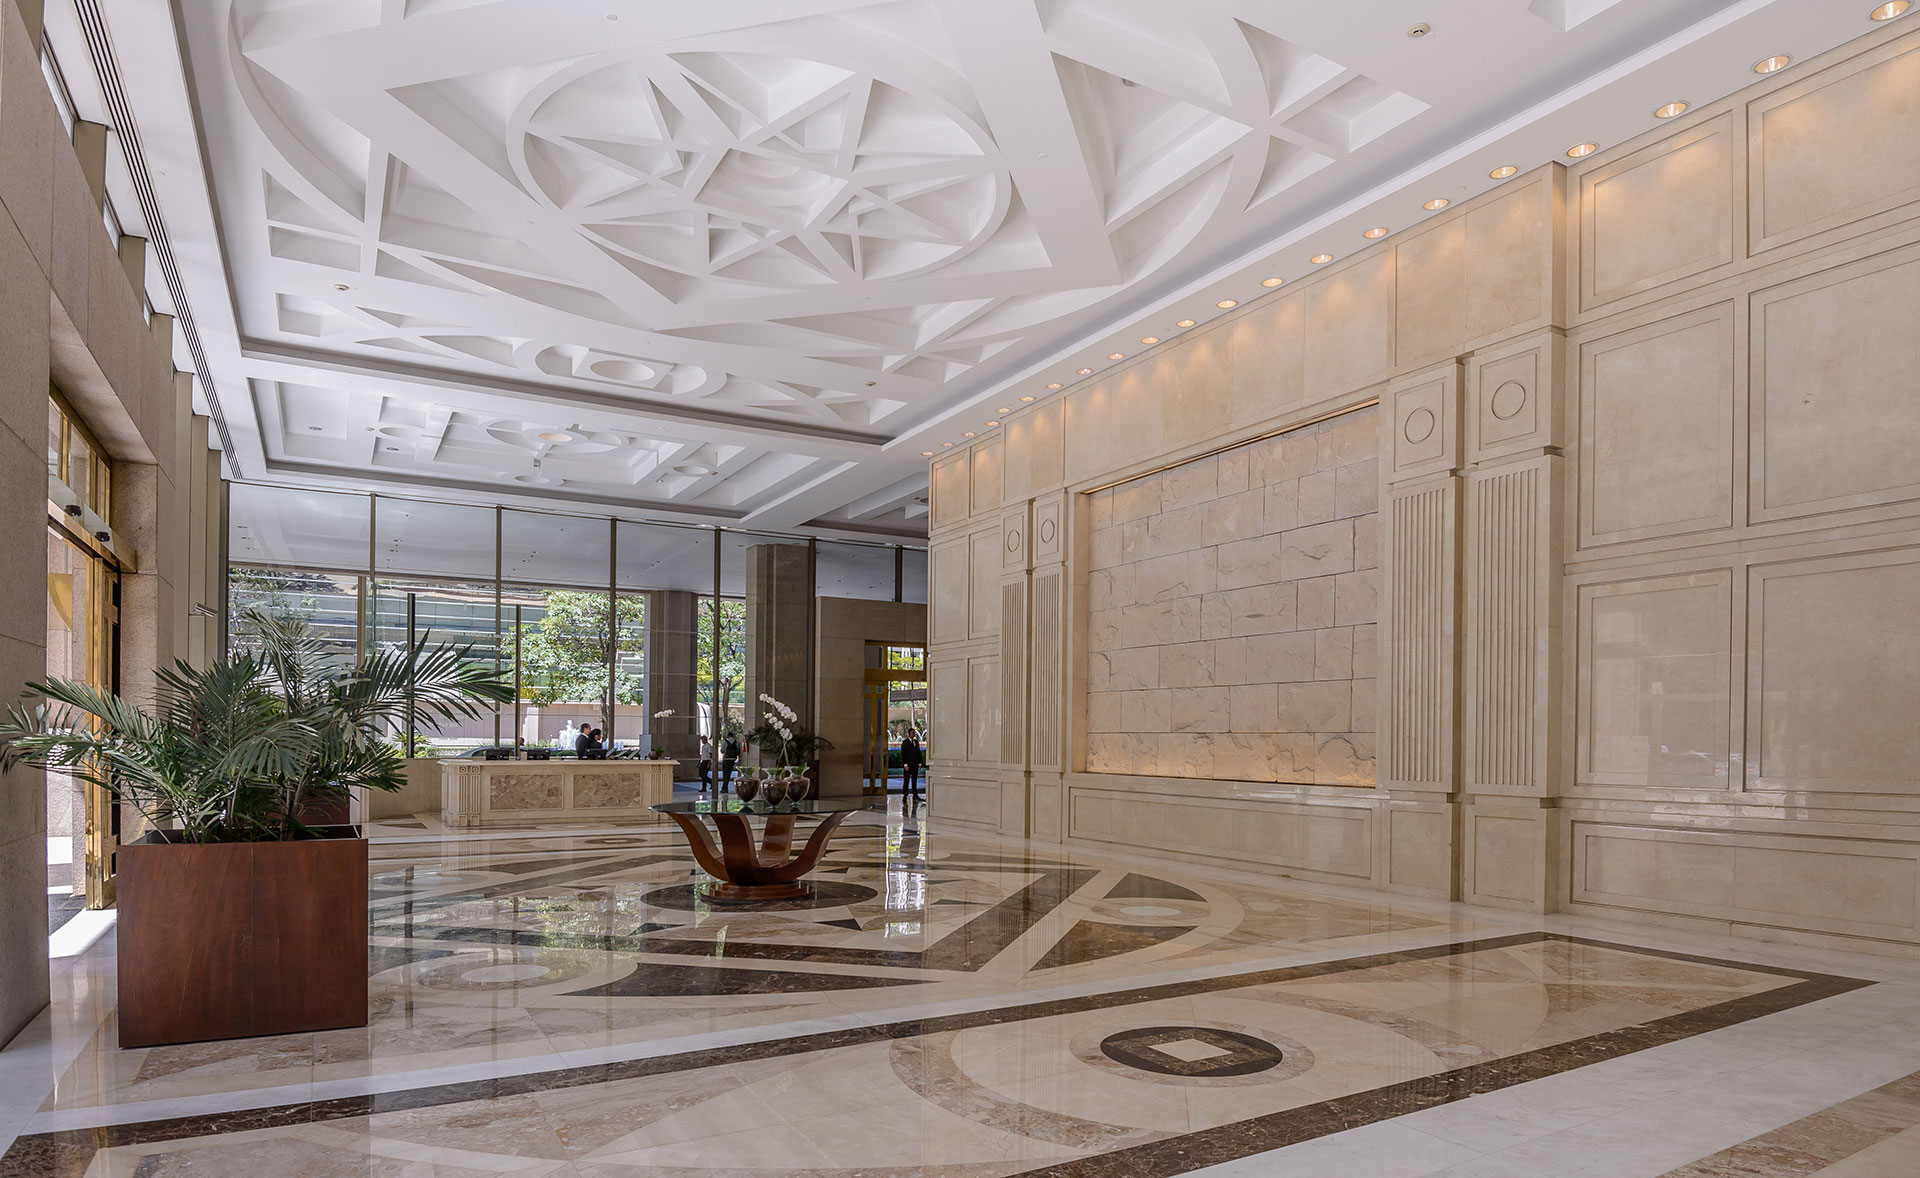 Faria Lima Financial Center foyer facing outward from lobby